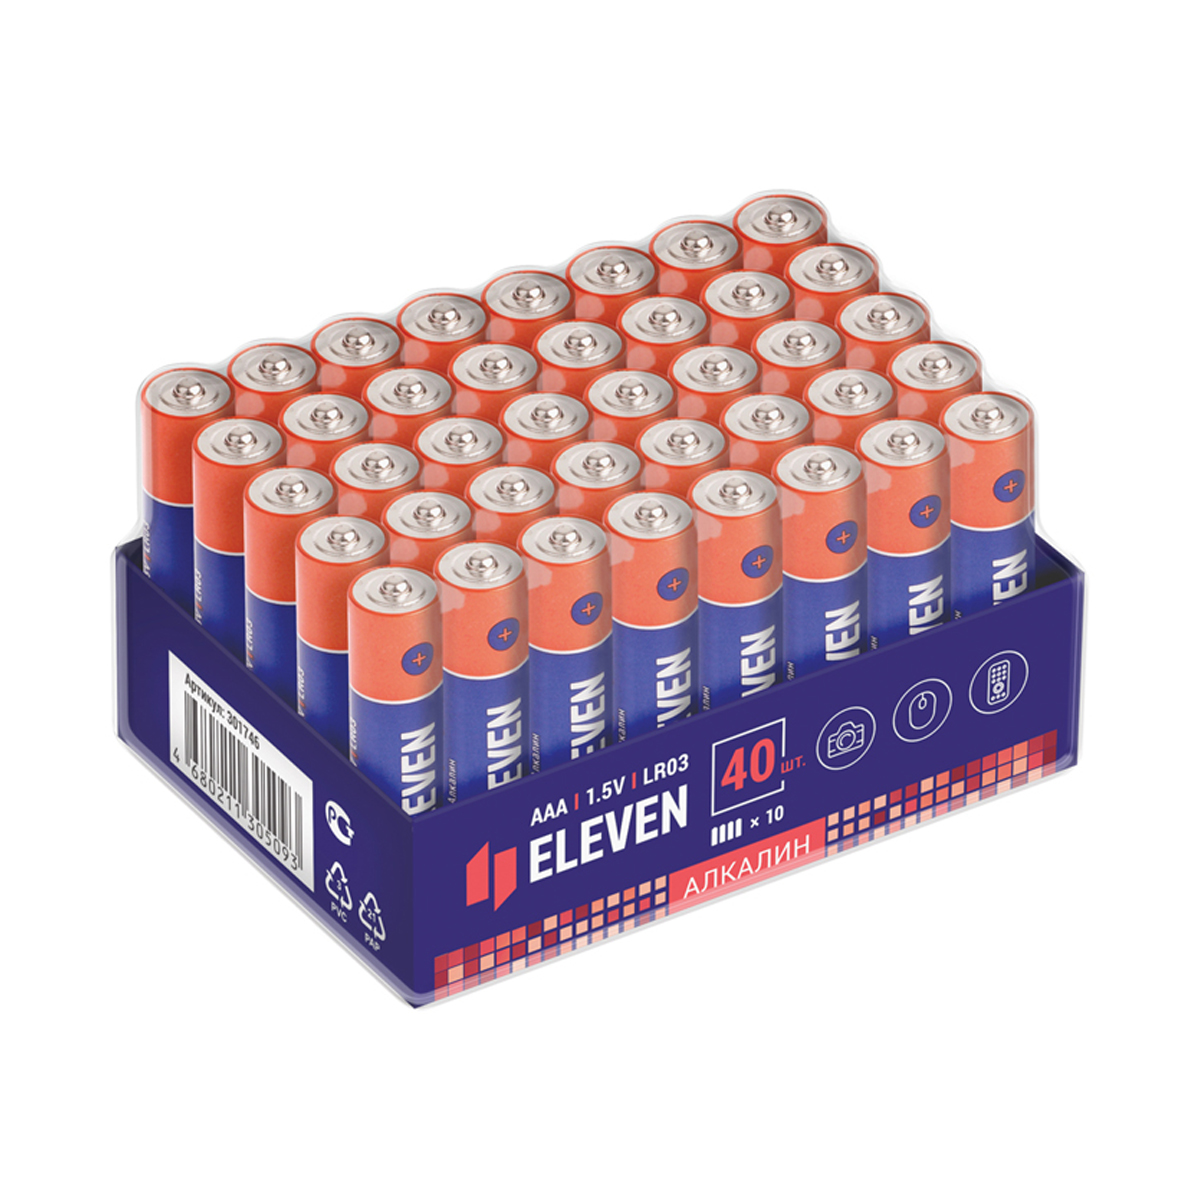 Батарейки Eleven 3А Мизинчиковые AAA (LR03), алкалиновые, 1,5В, 40 шт алкалиновые пуговичные батарейки gp